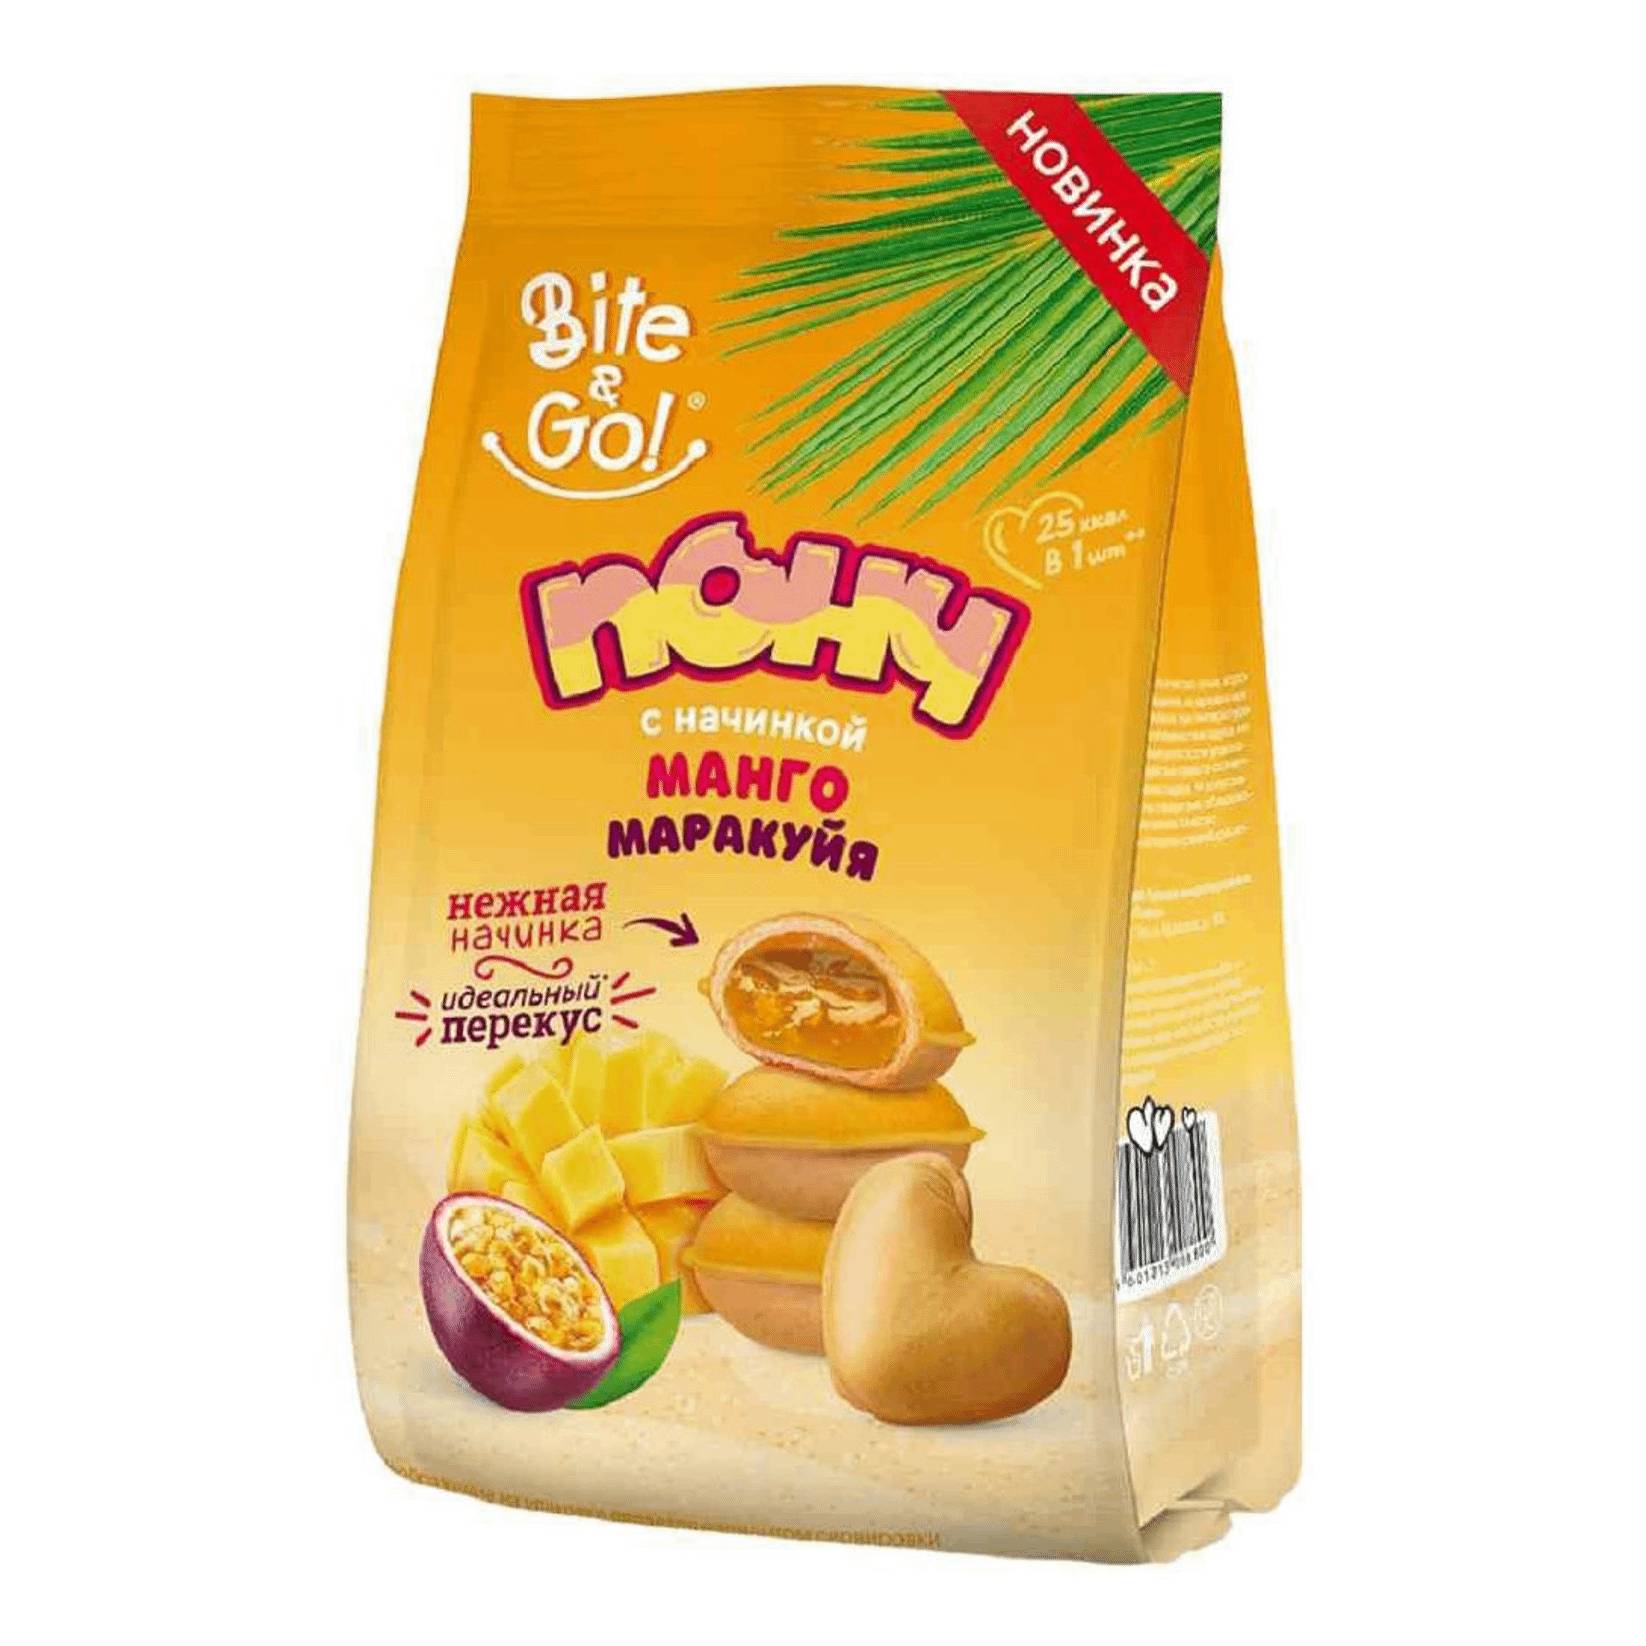 Печенье Рот Фронт манго-маракуйя понч, 150 г печенье r a w life без глютена кокос манго без глютена 75 г